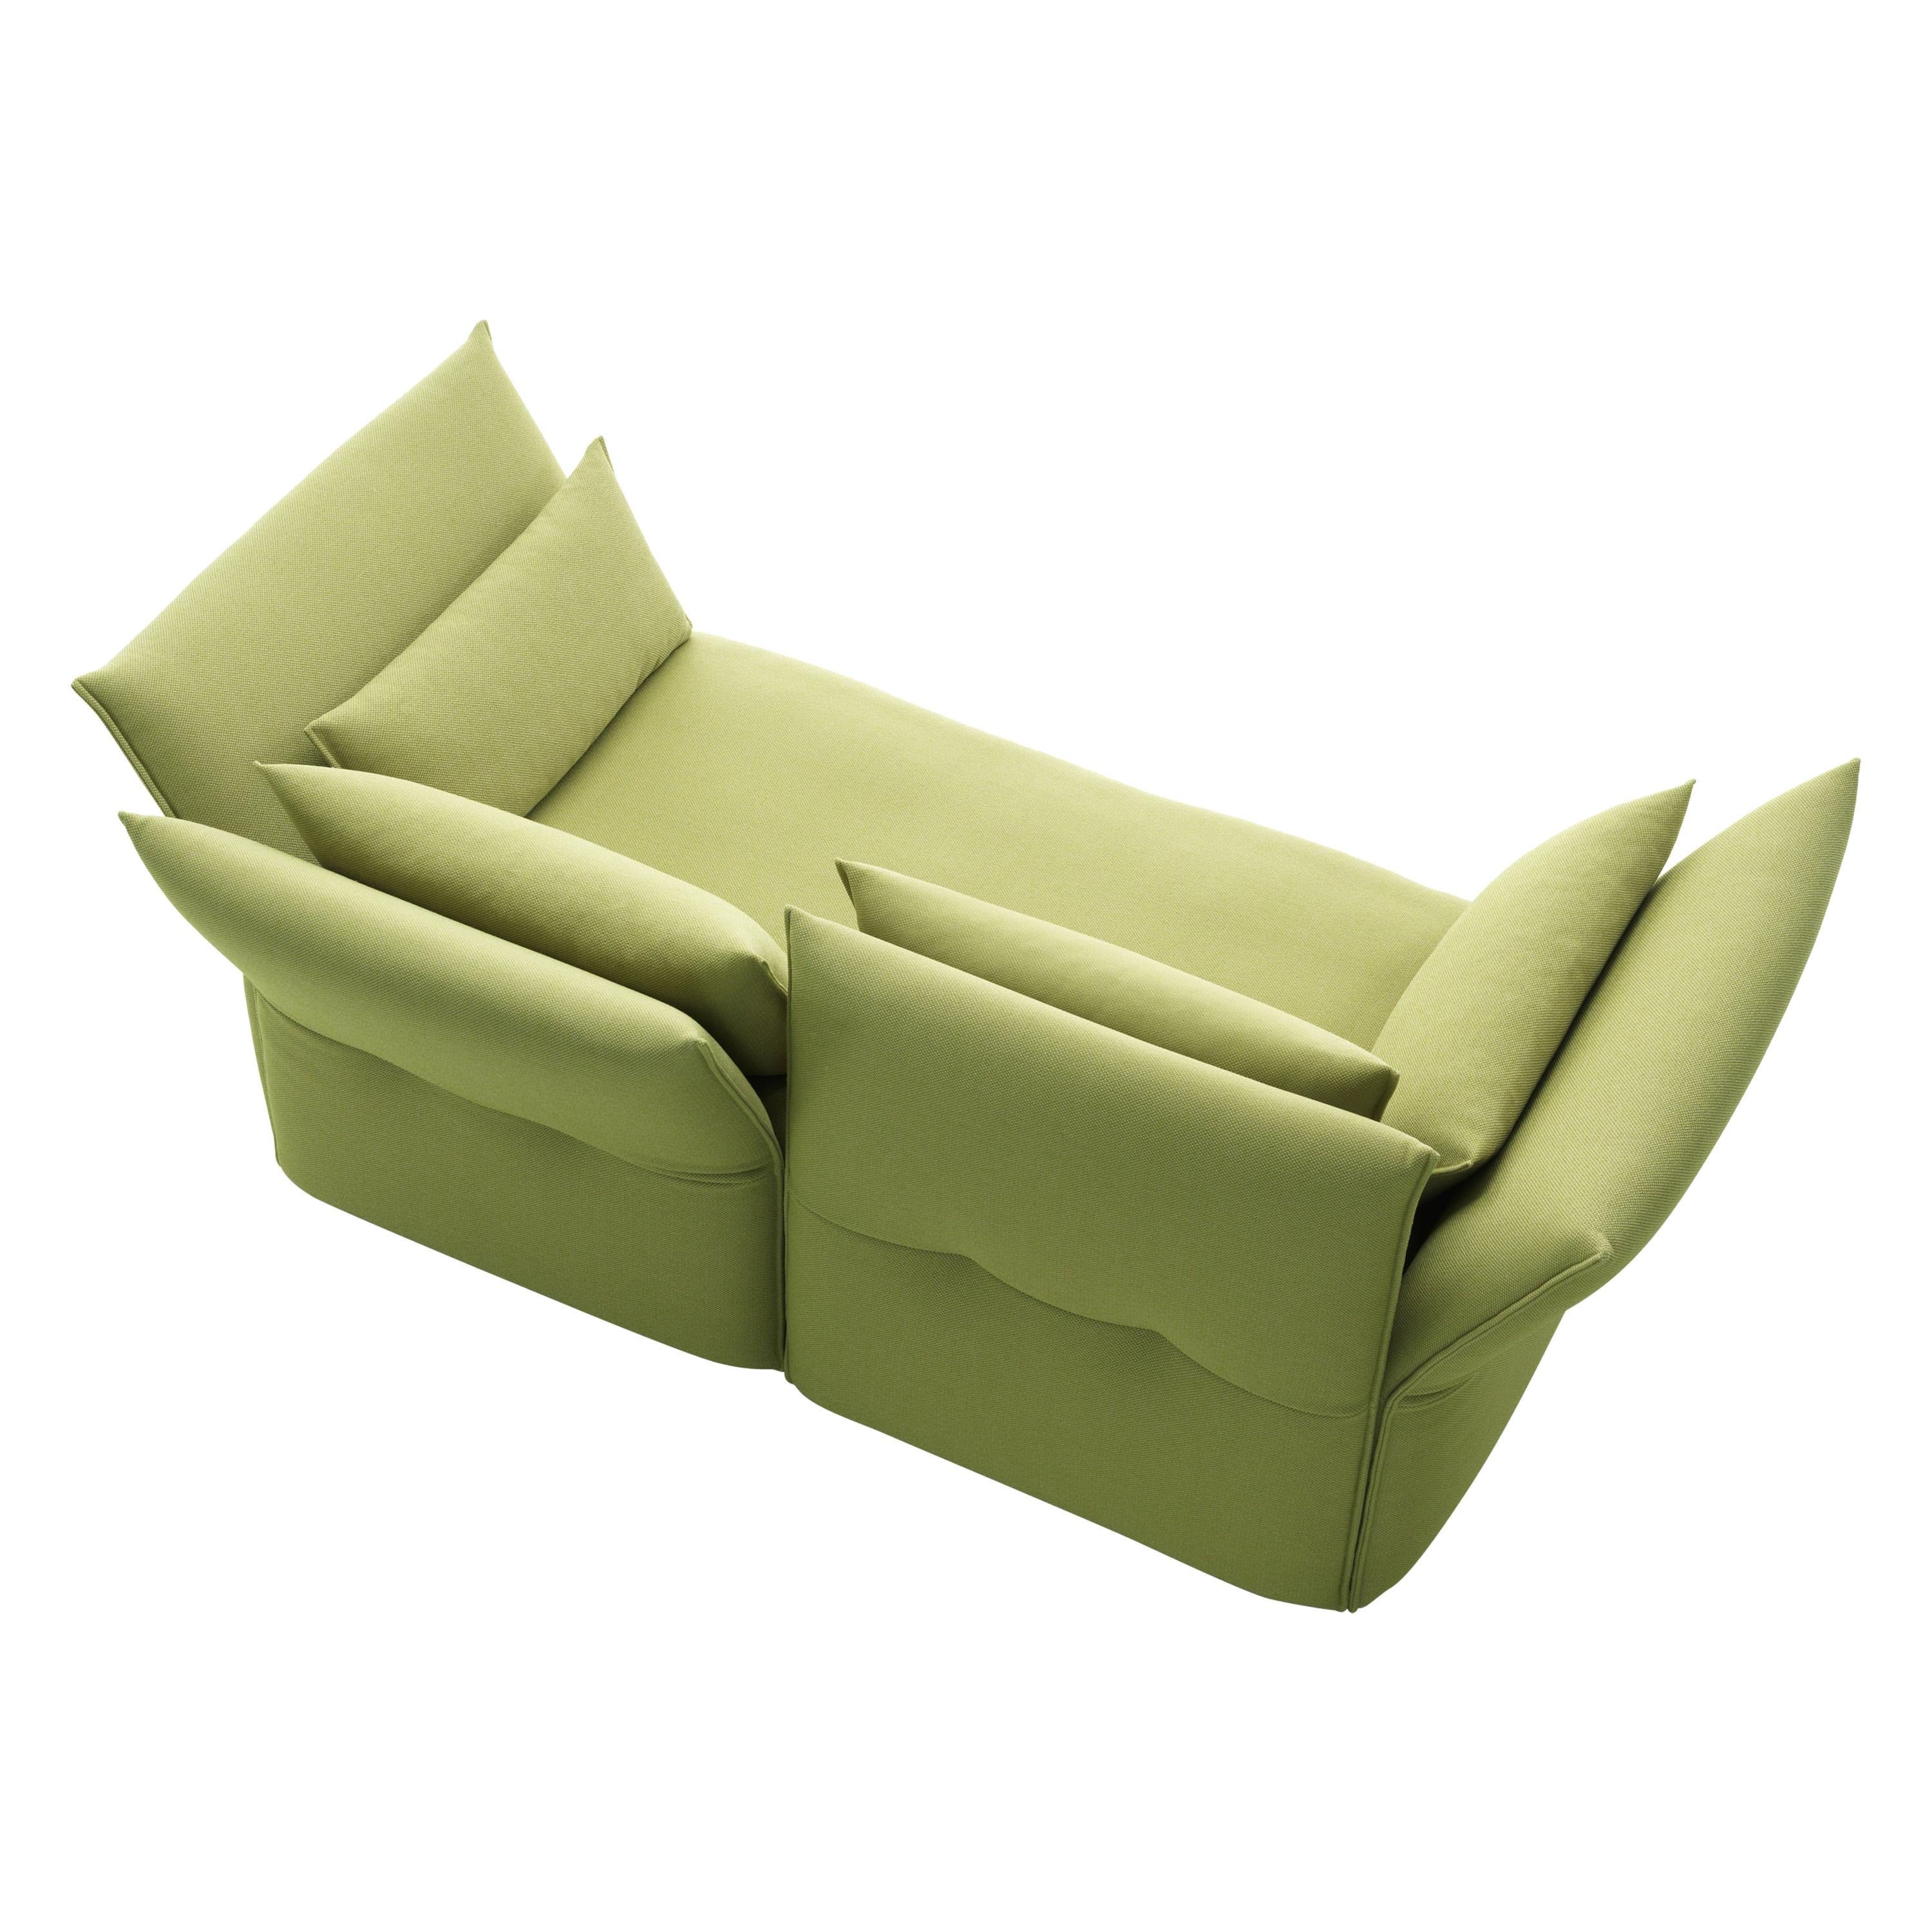 Vitra Mariposa 2-Seat Sofa in Sand & Avocado Credo by Edward Barber & Jay For Sale